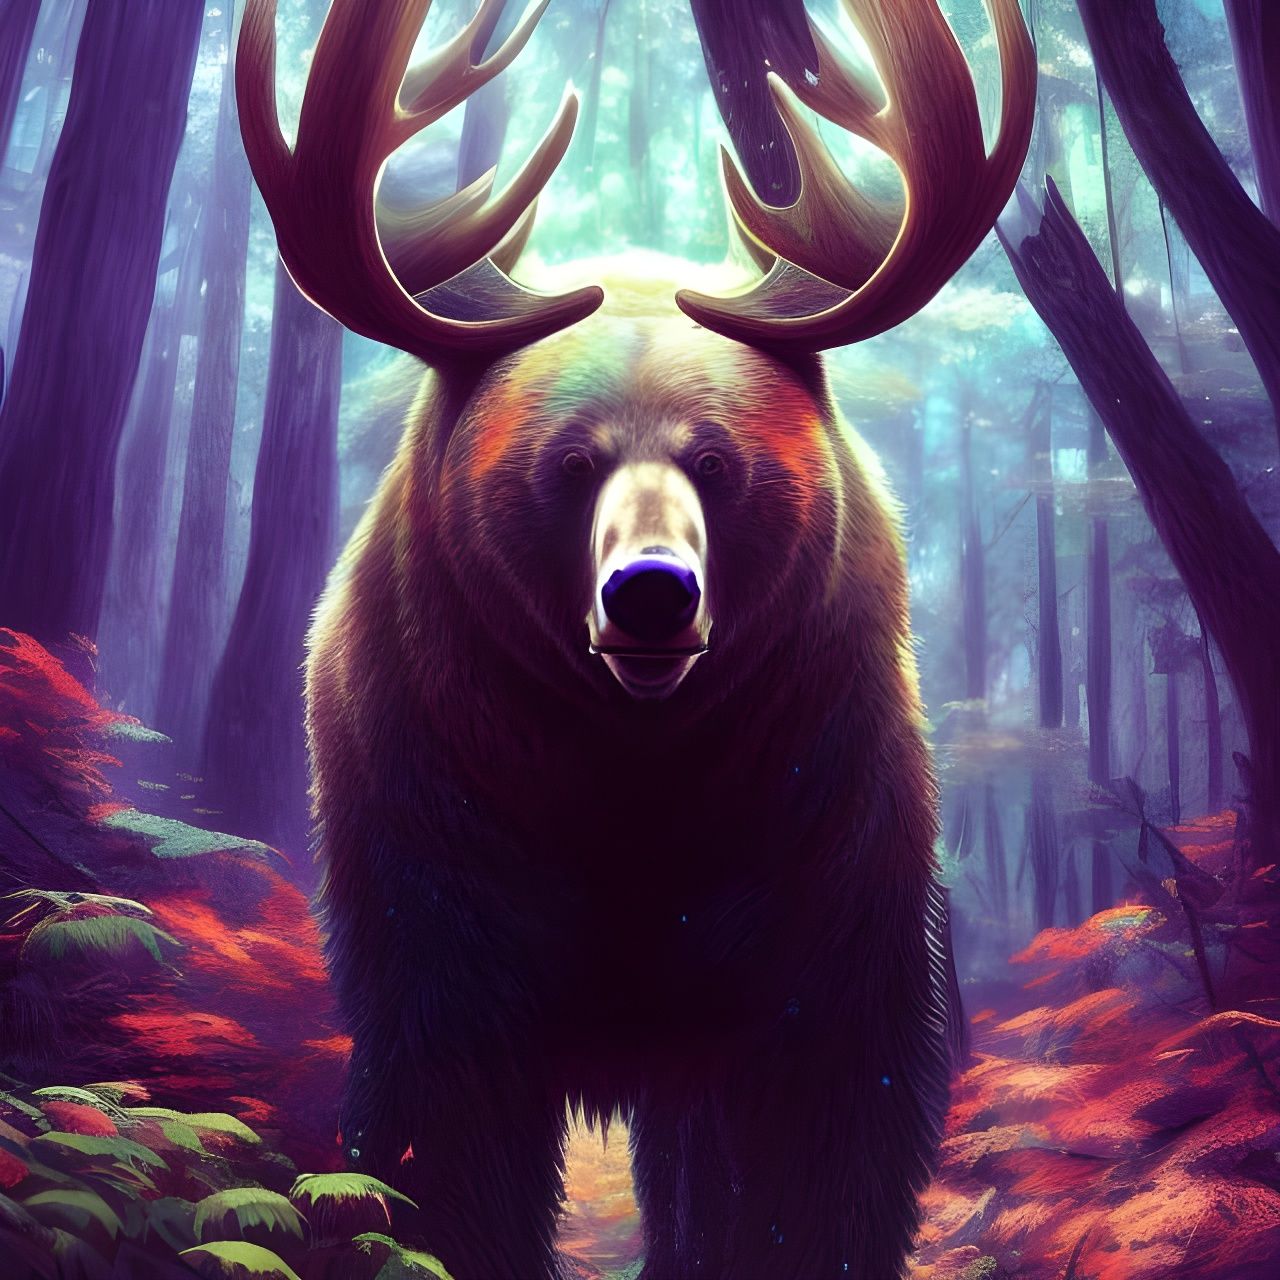 Bear + moose hybrid (can you name it?)